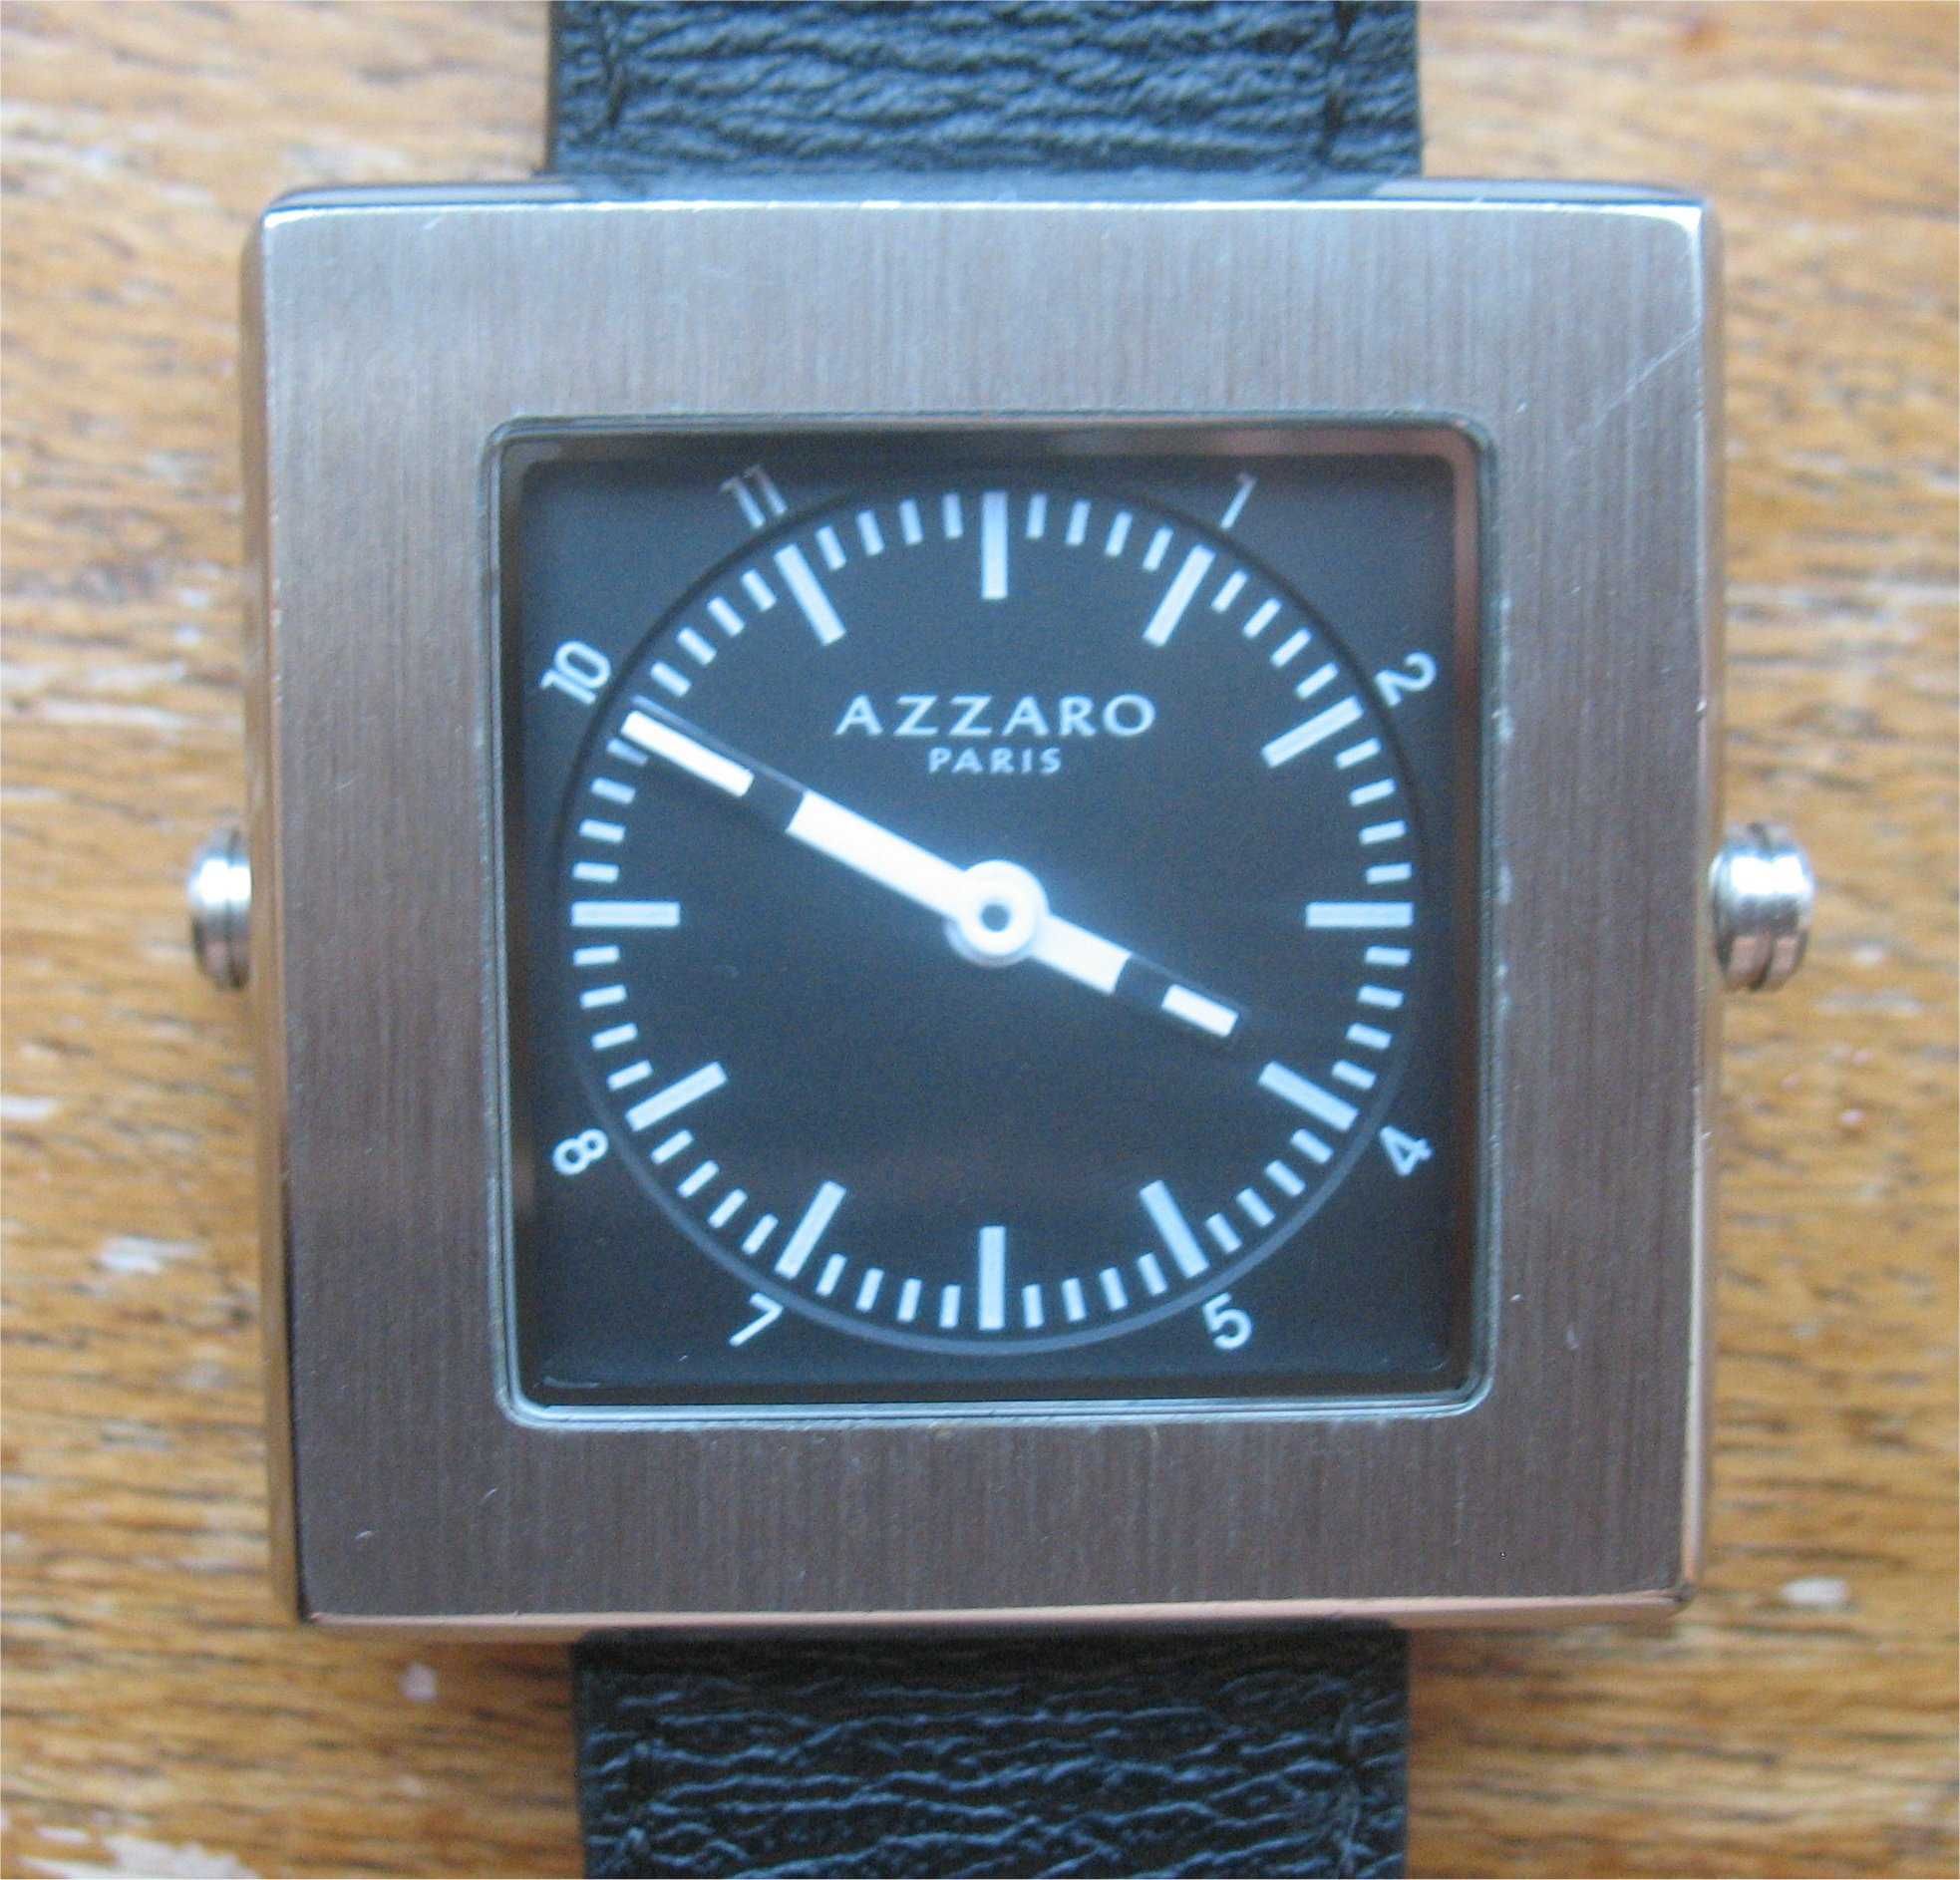 Azzaro Paris - Relógio Duplo